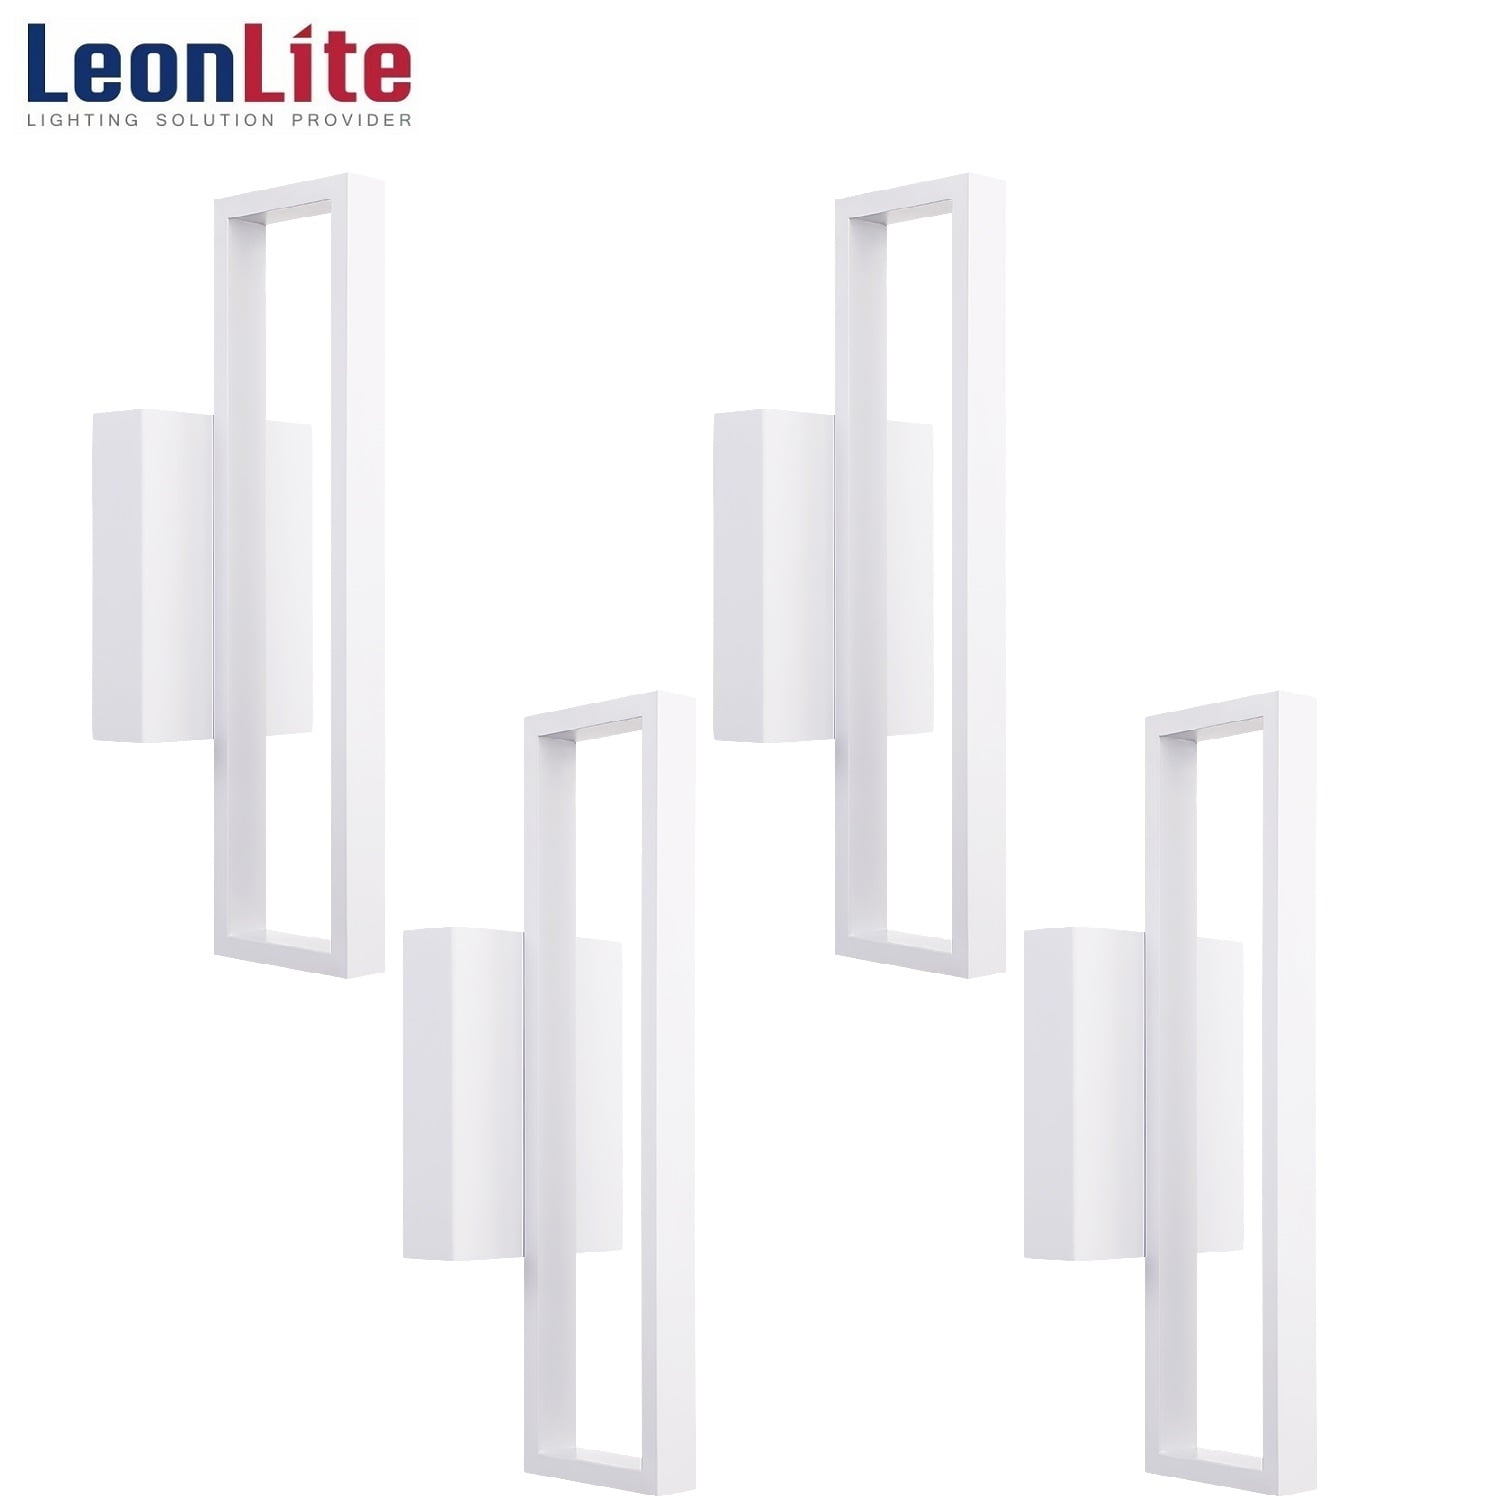 Decorative LED 12W 2D Ceiling Wall Light Indoor Bulkhead Fitting 6000K White 